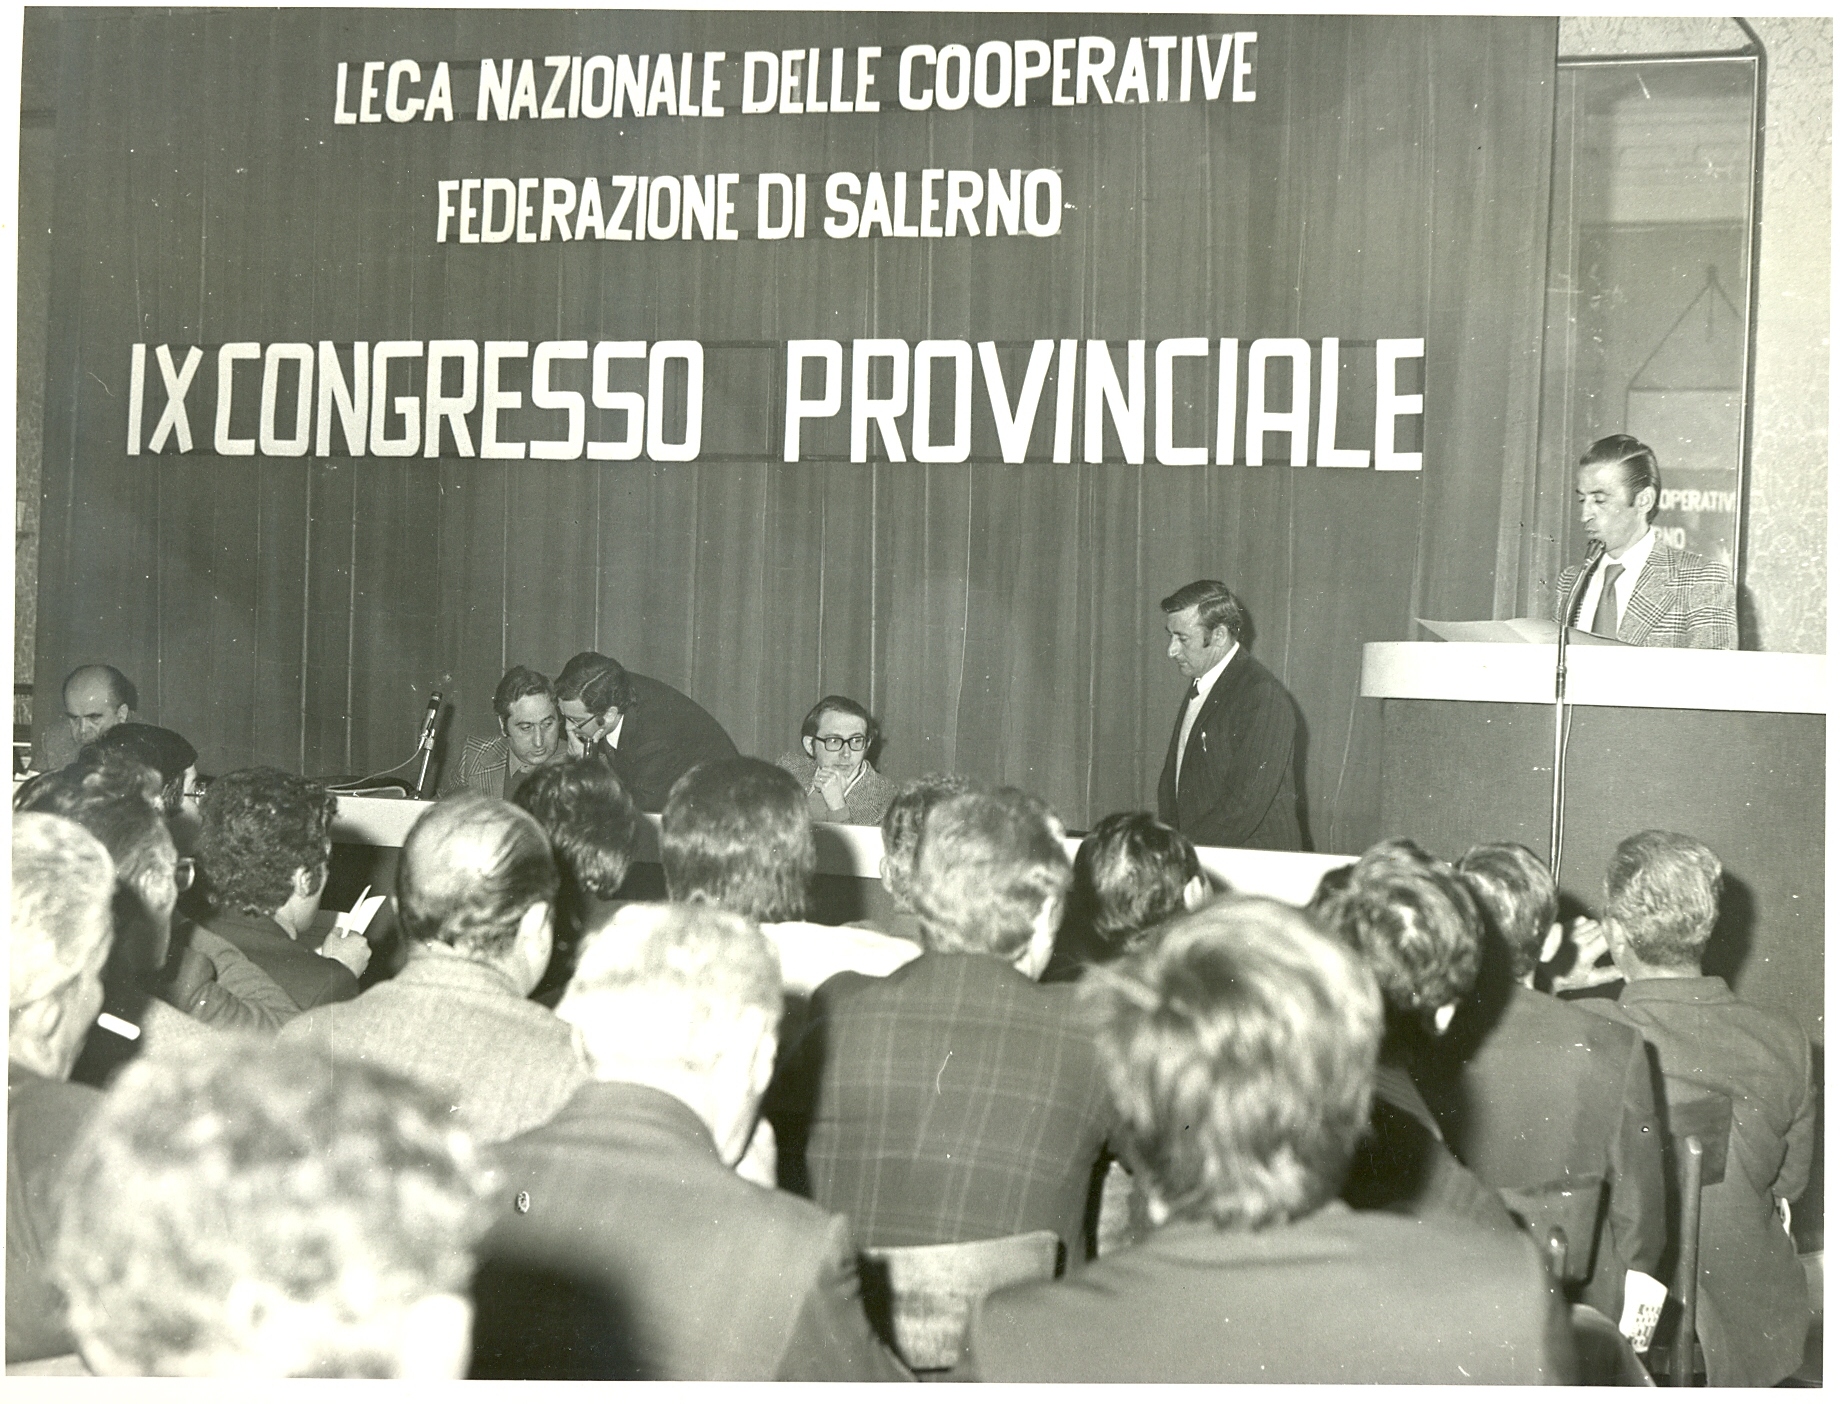 Legacoop Campania - la nostra storia